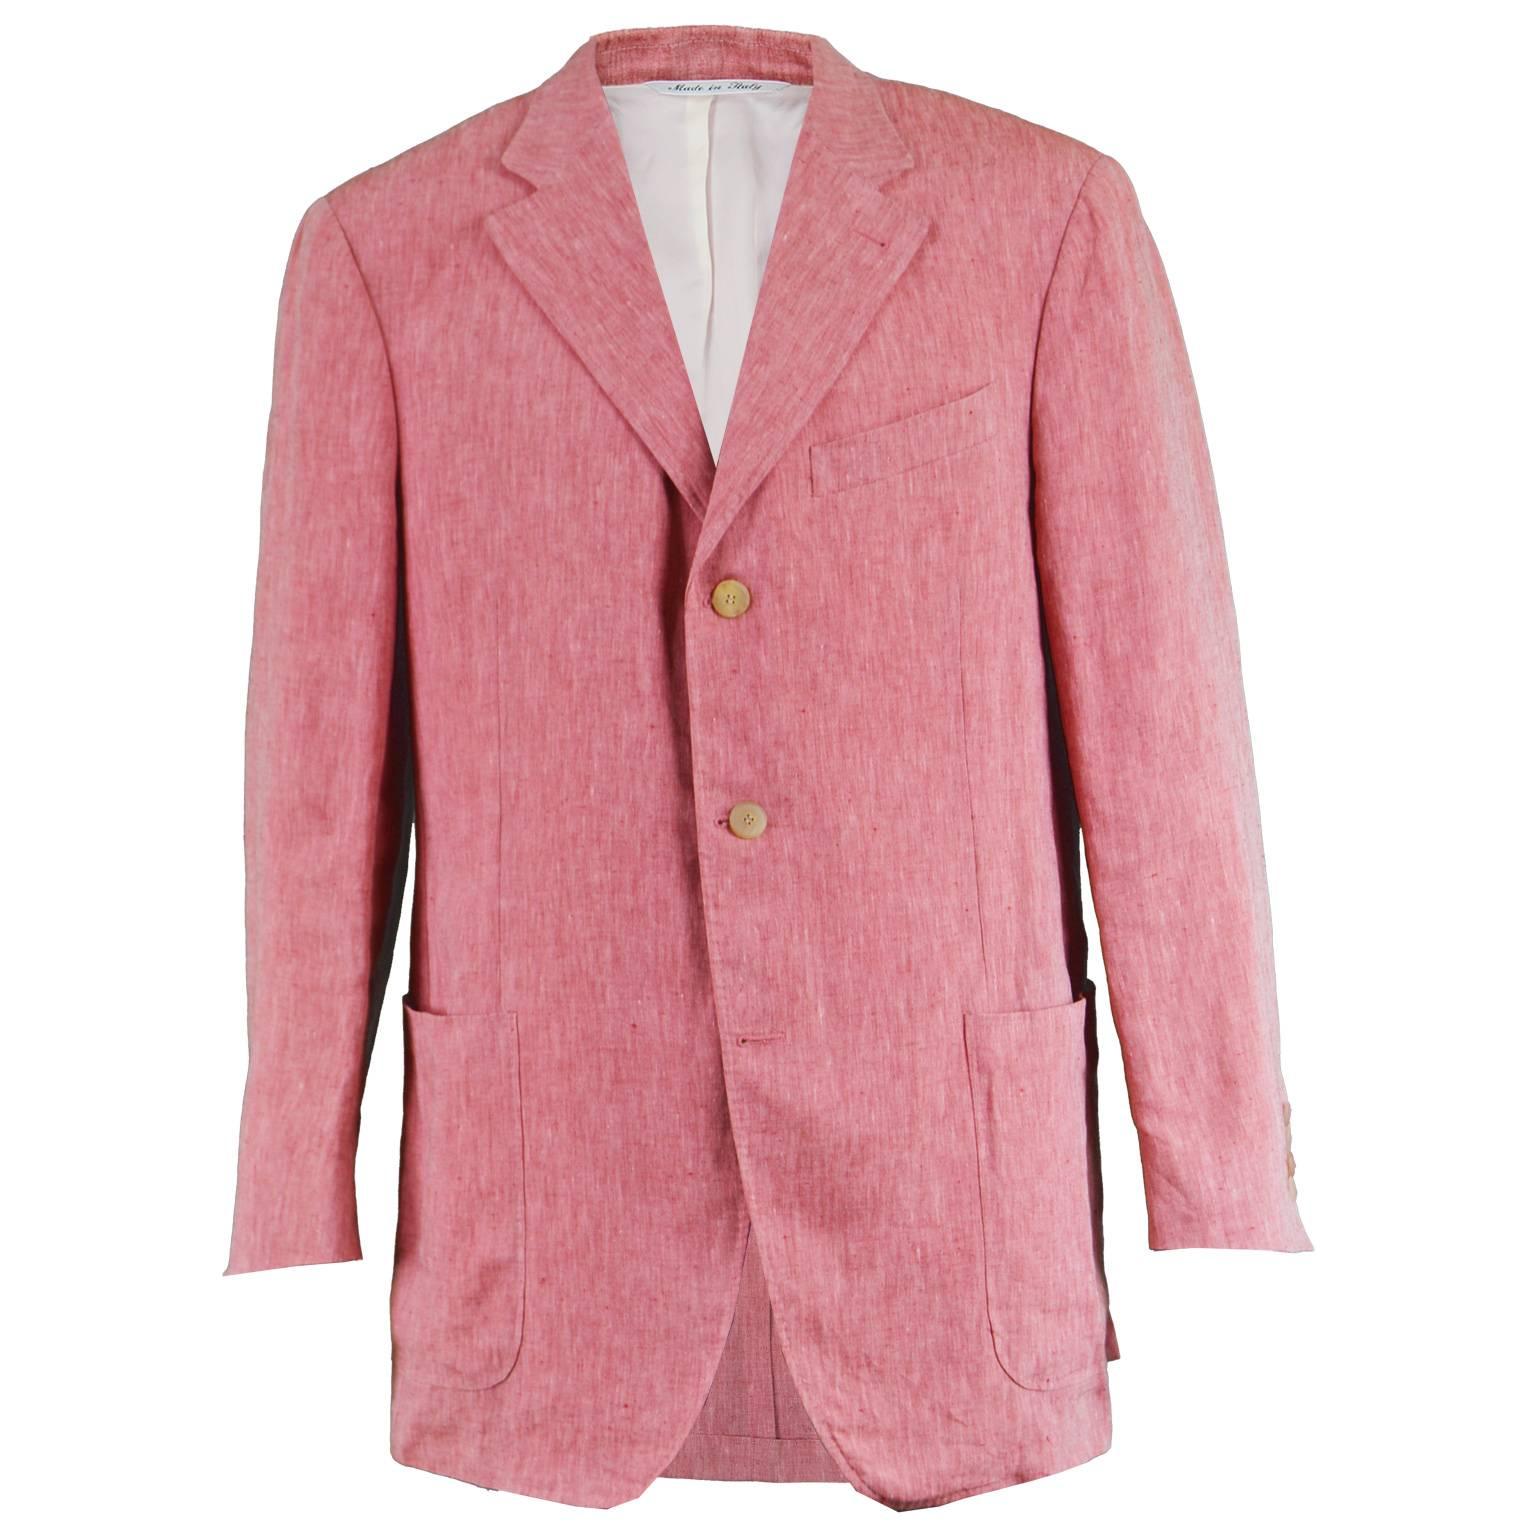 Canali for Holt Renfrew Men's Salmon Pink Linen Sport Coat Blazer Jacket 44R